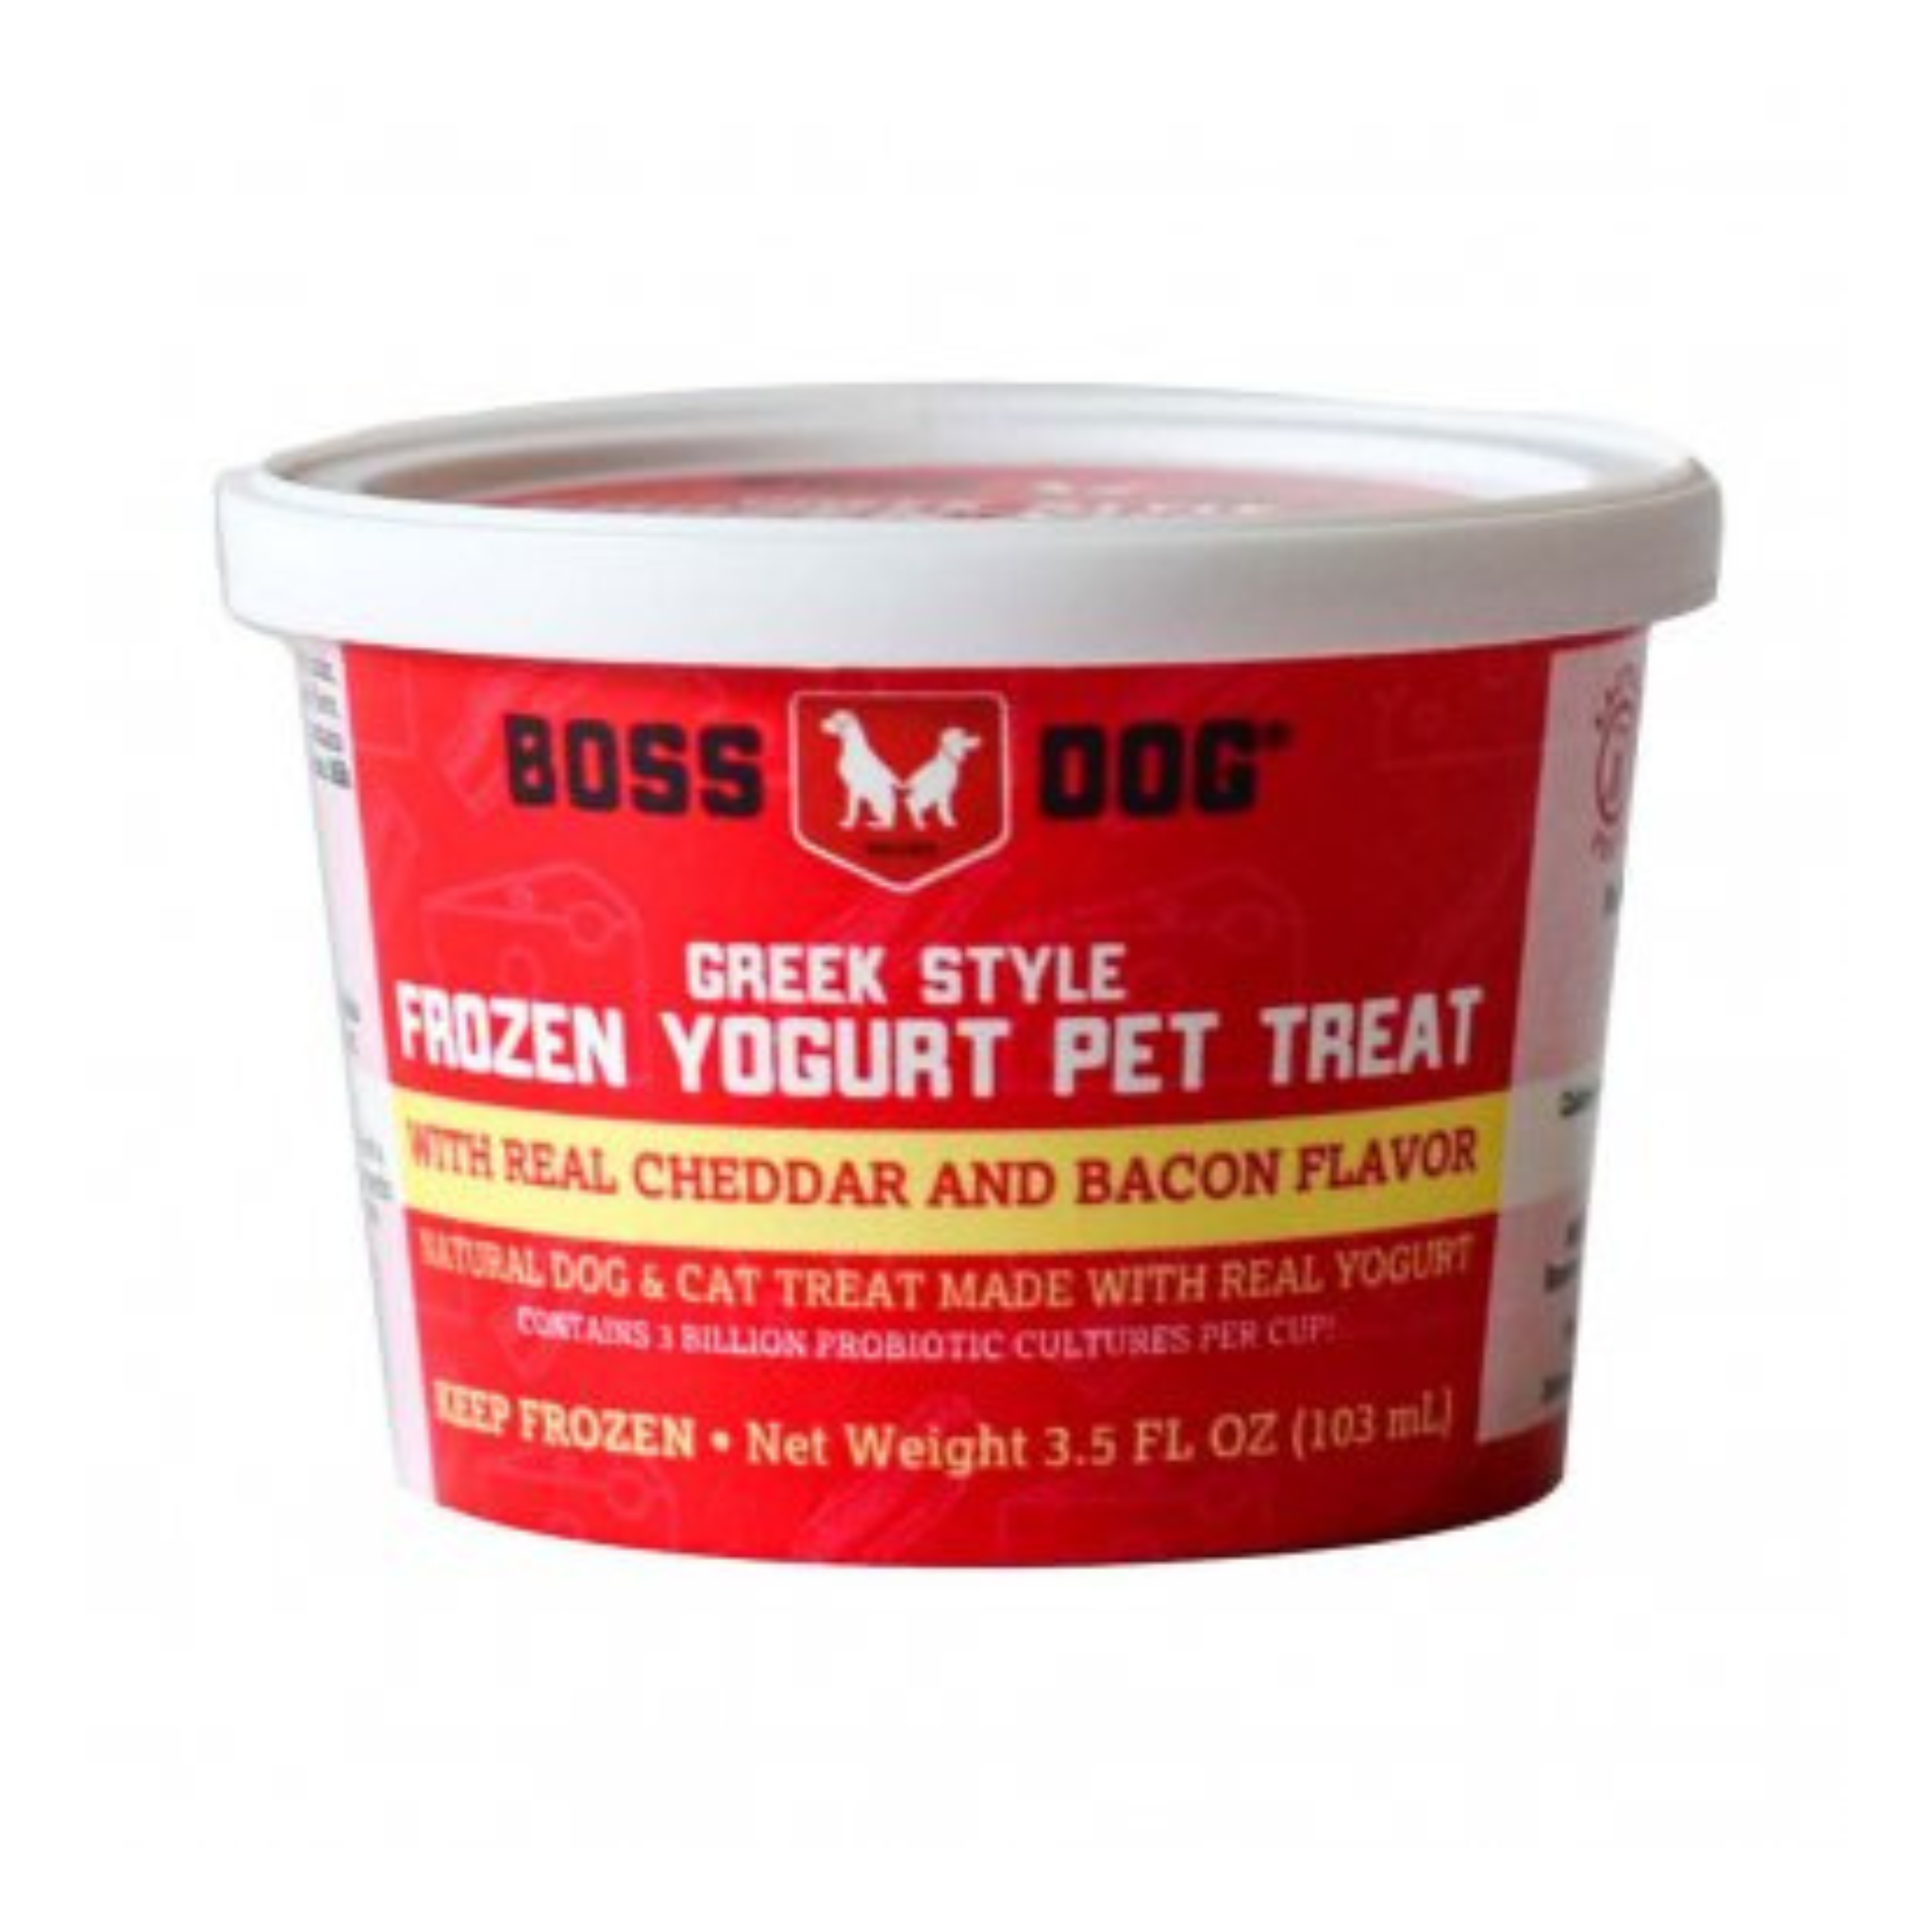 Boss Dog Frozen Greek Yogurt Bacon & Cheddar - Mutts & Co.